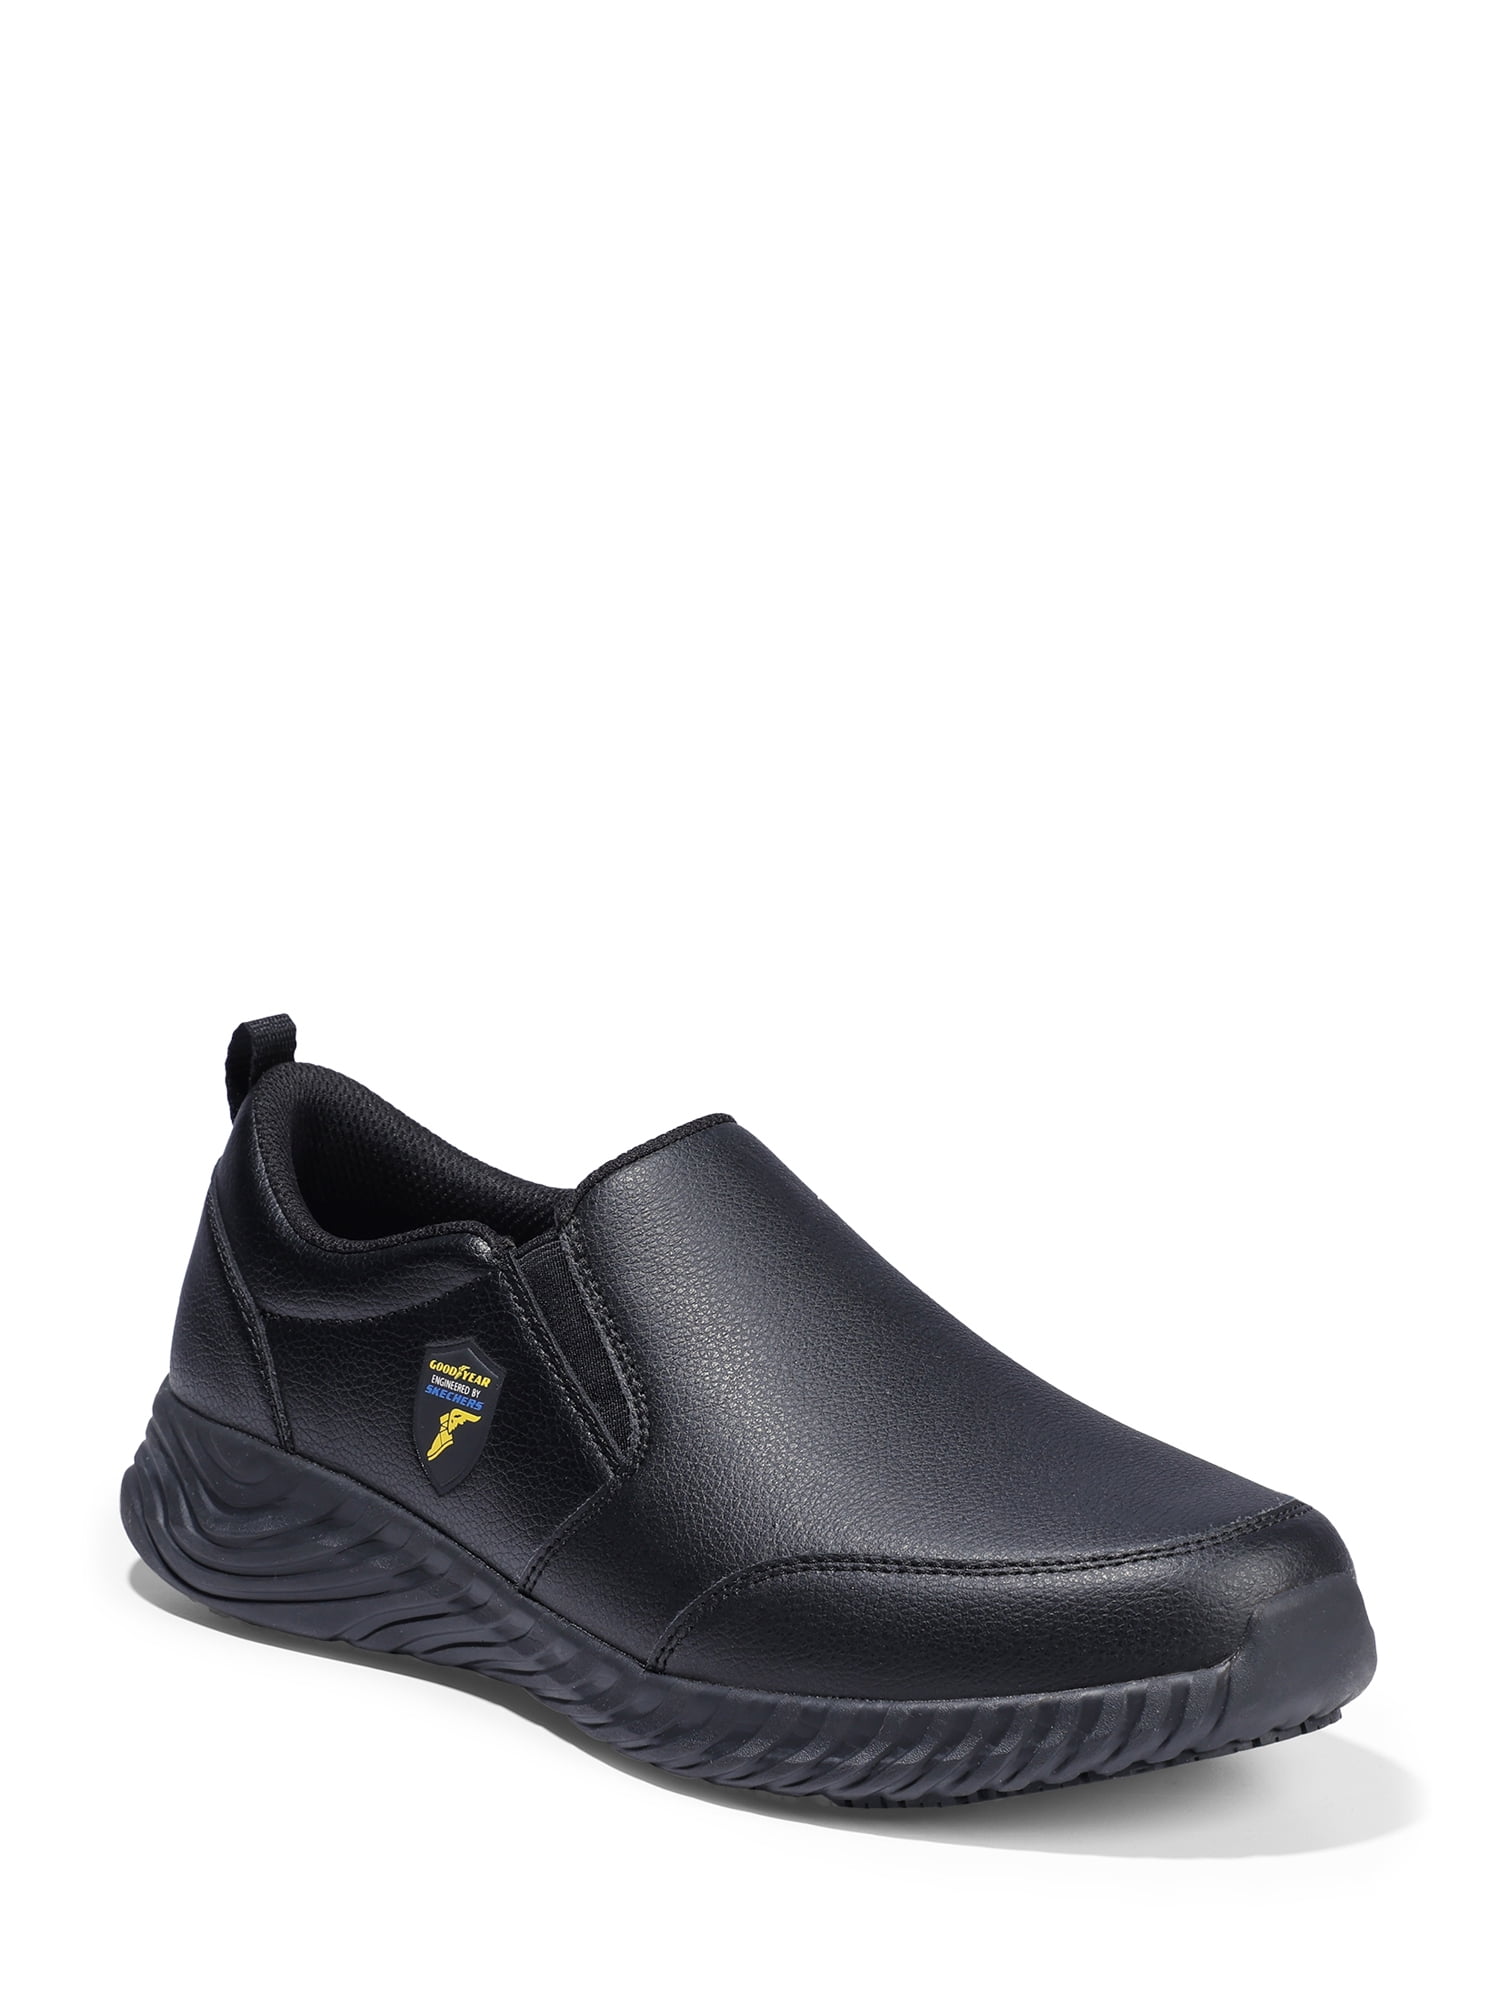 Goodyear Engineered by Skechers Women's Moja Slip Resistant Shoes